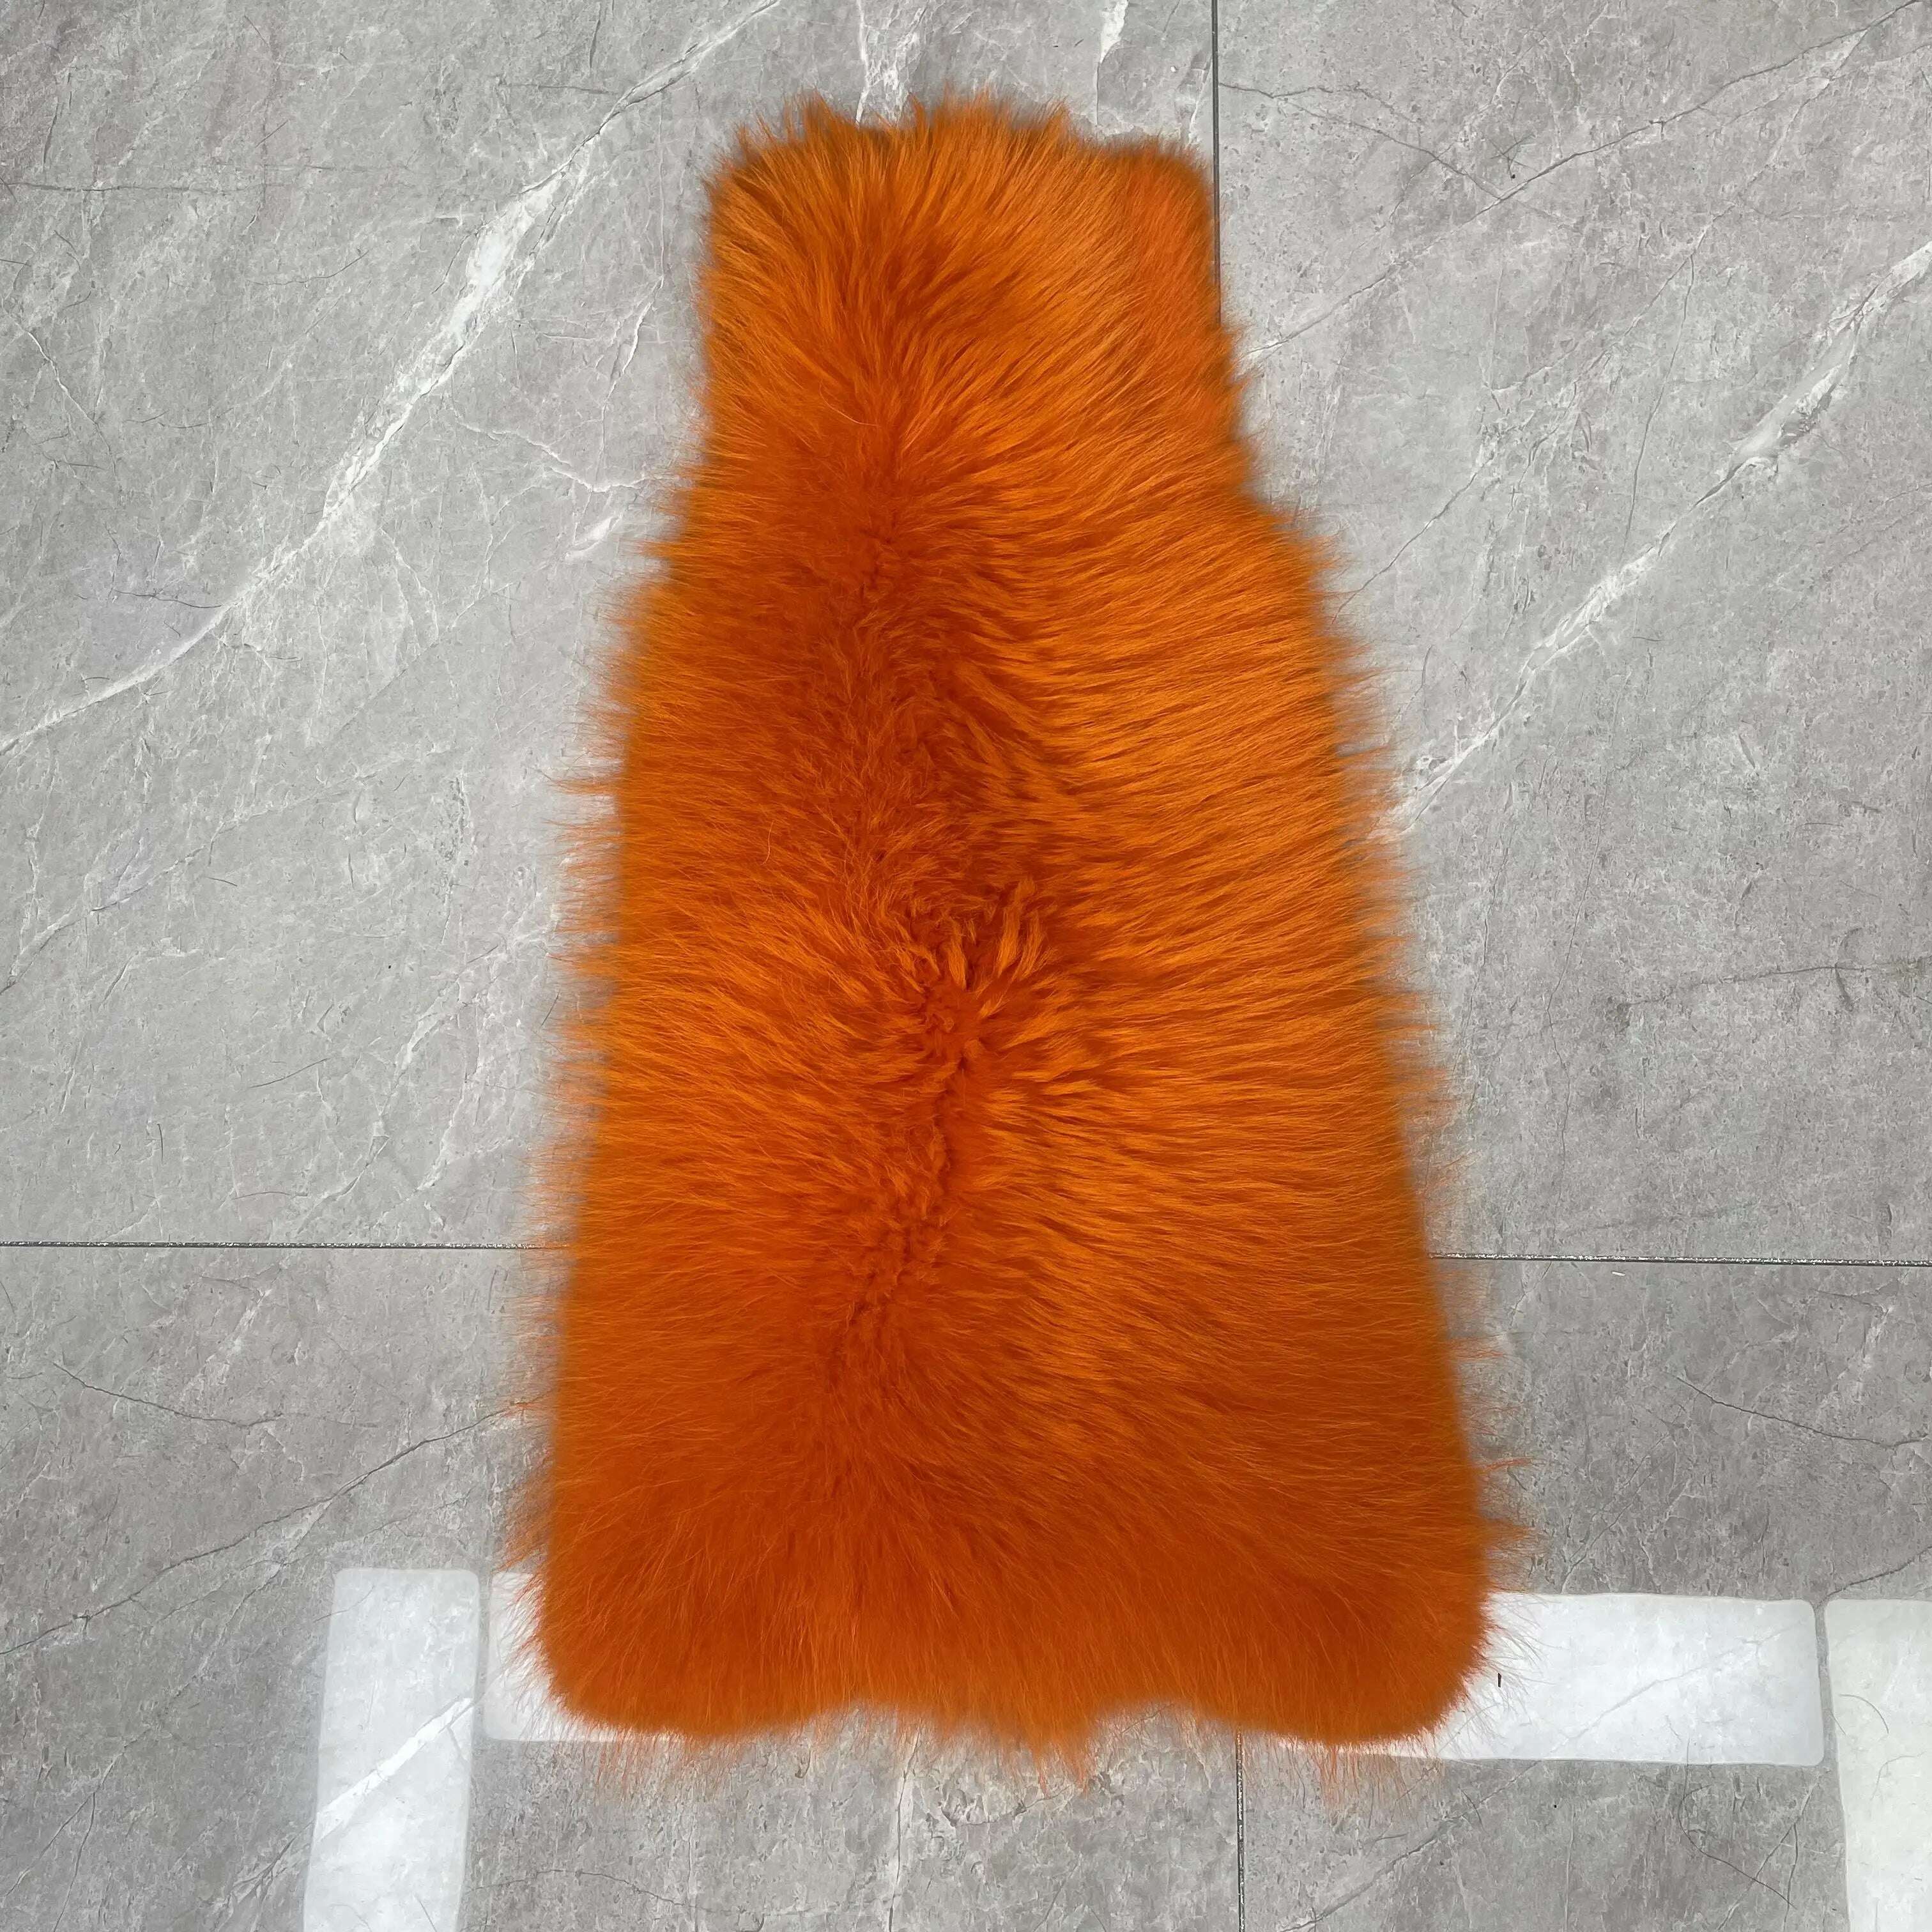 KIMLUD, Real Raccoon Fur Jacket Men Fashion Coat Winter Warm Long Style, Orange / XS(88cm), KIMLUD Women's Clothes